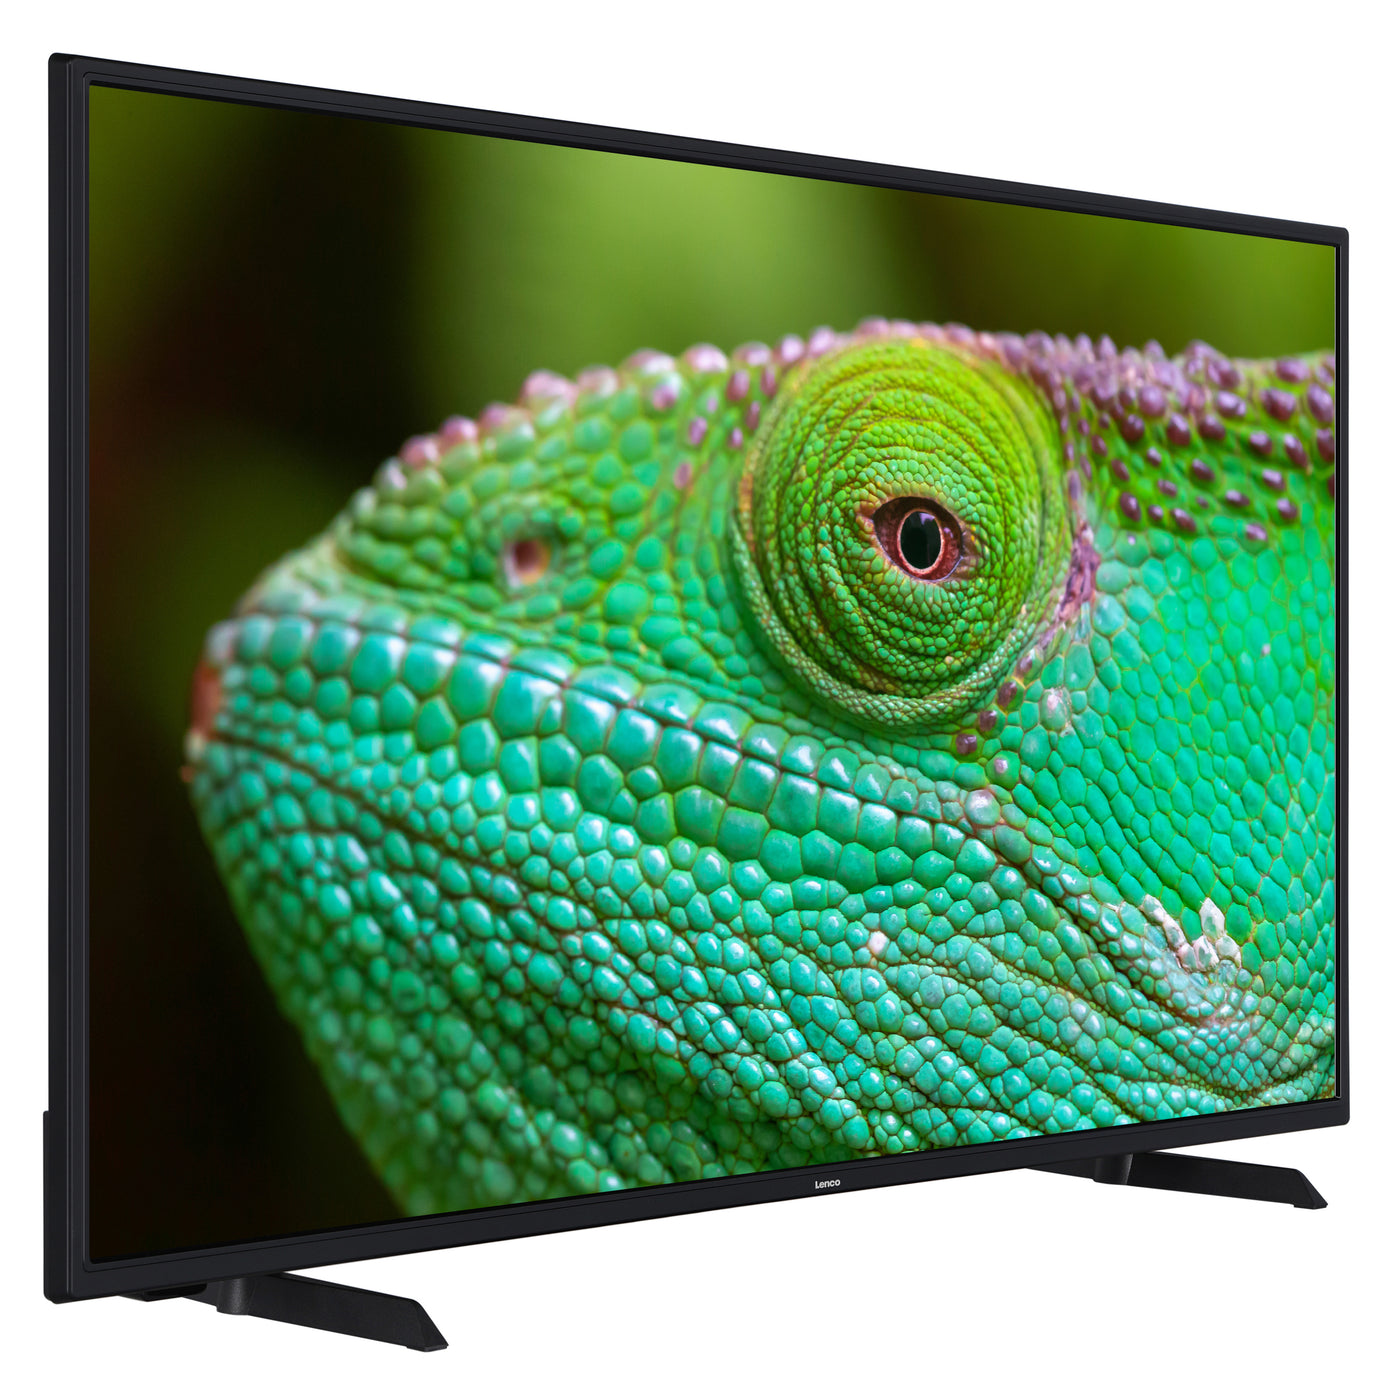 LENCO LED-4353BK - 43" 4K Android Smart TV, black